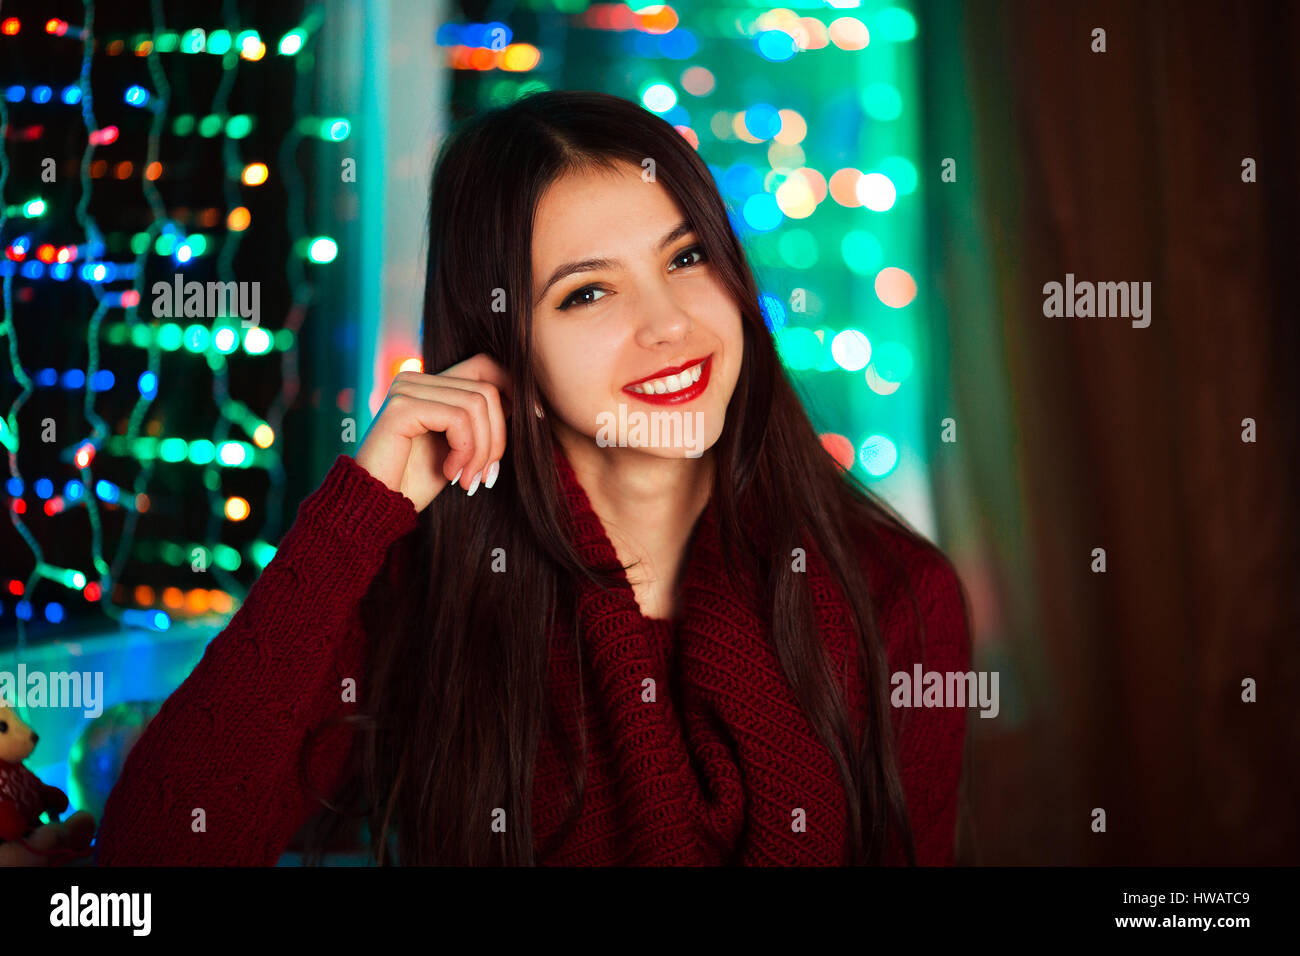 Smiling happy girl in red sweater in studio Stock Photo